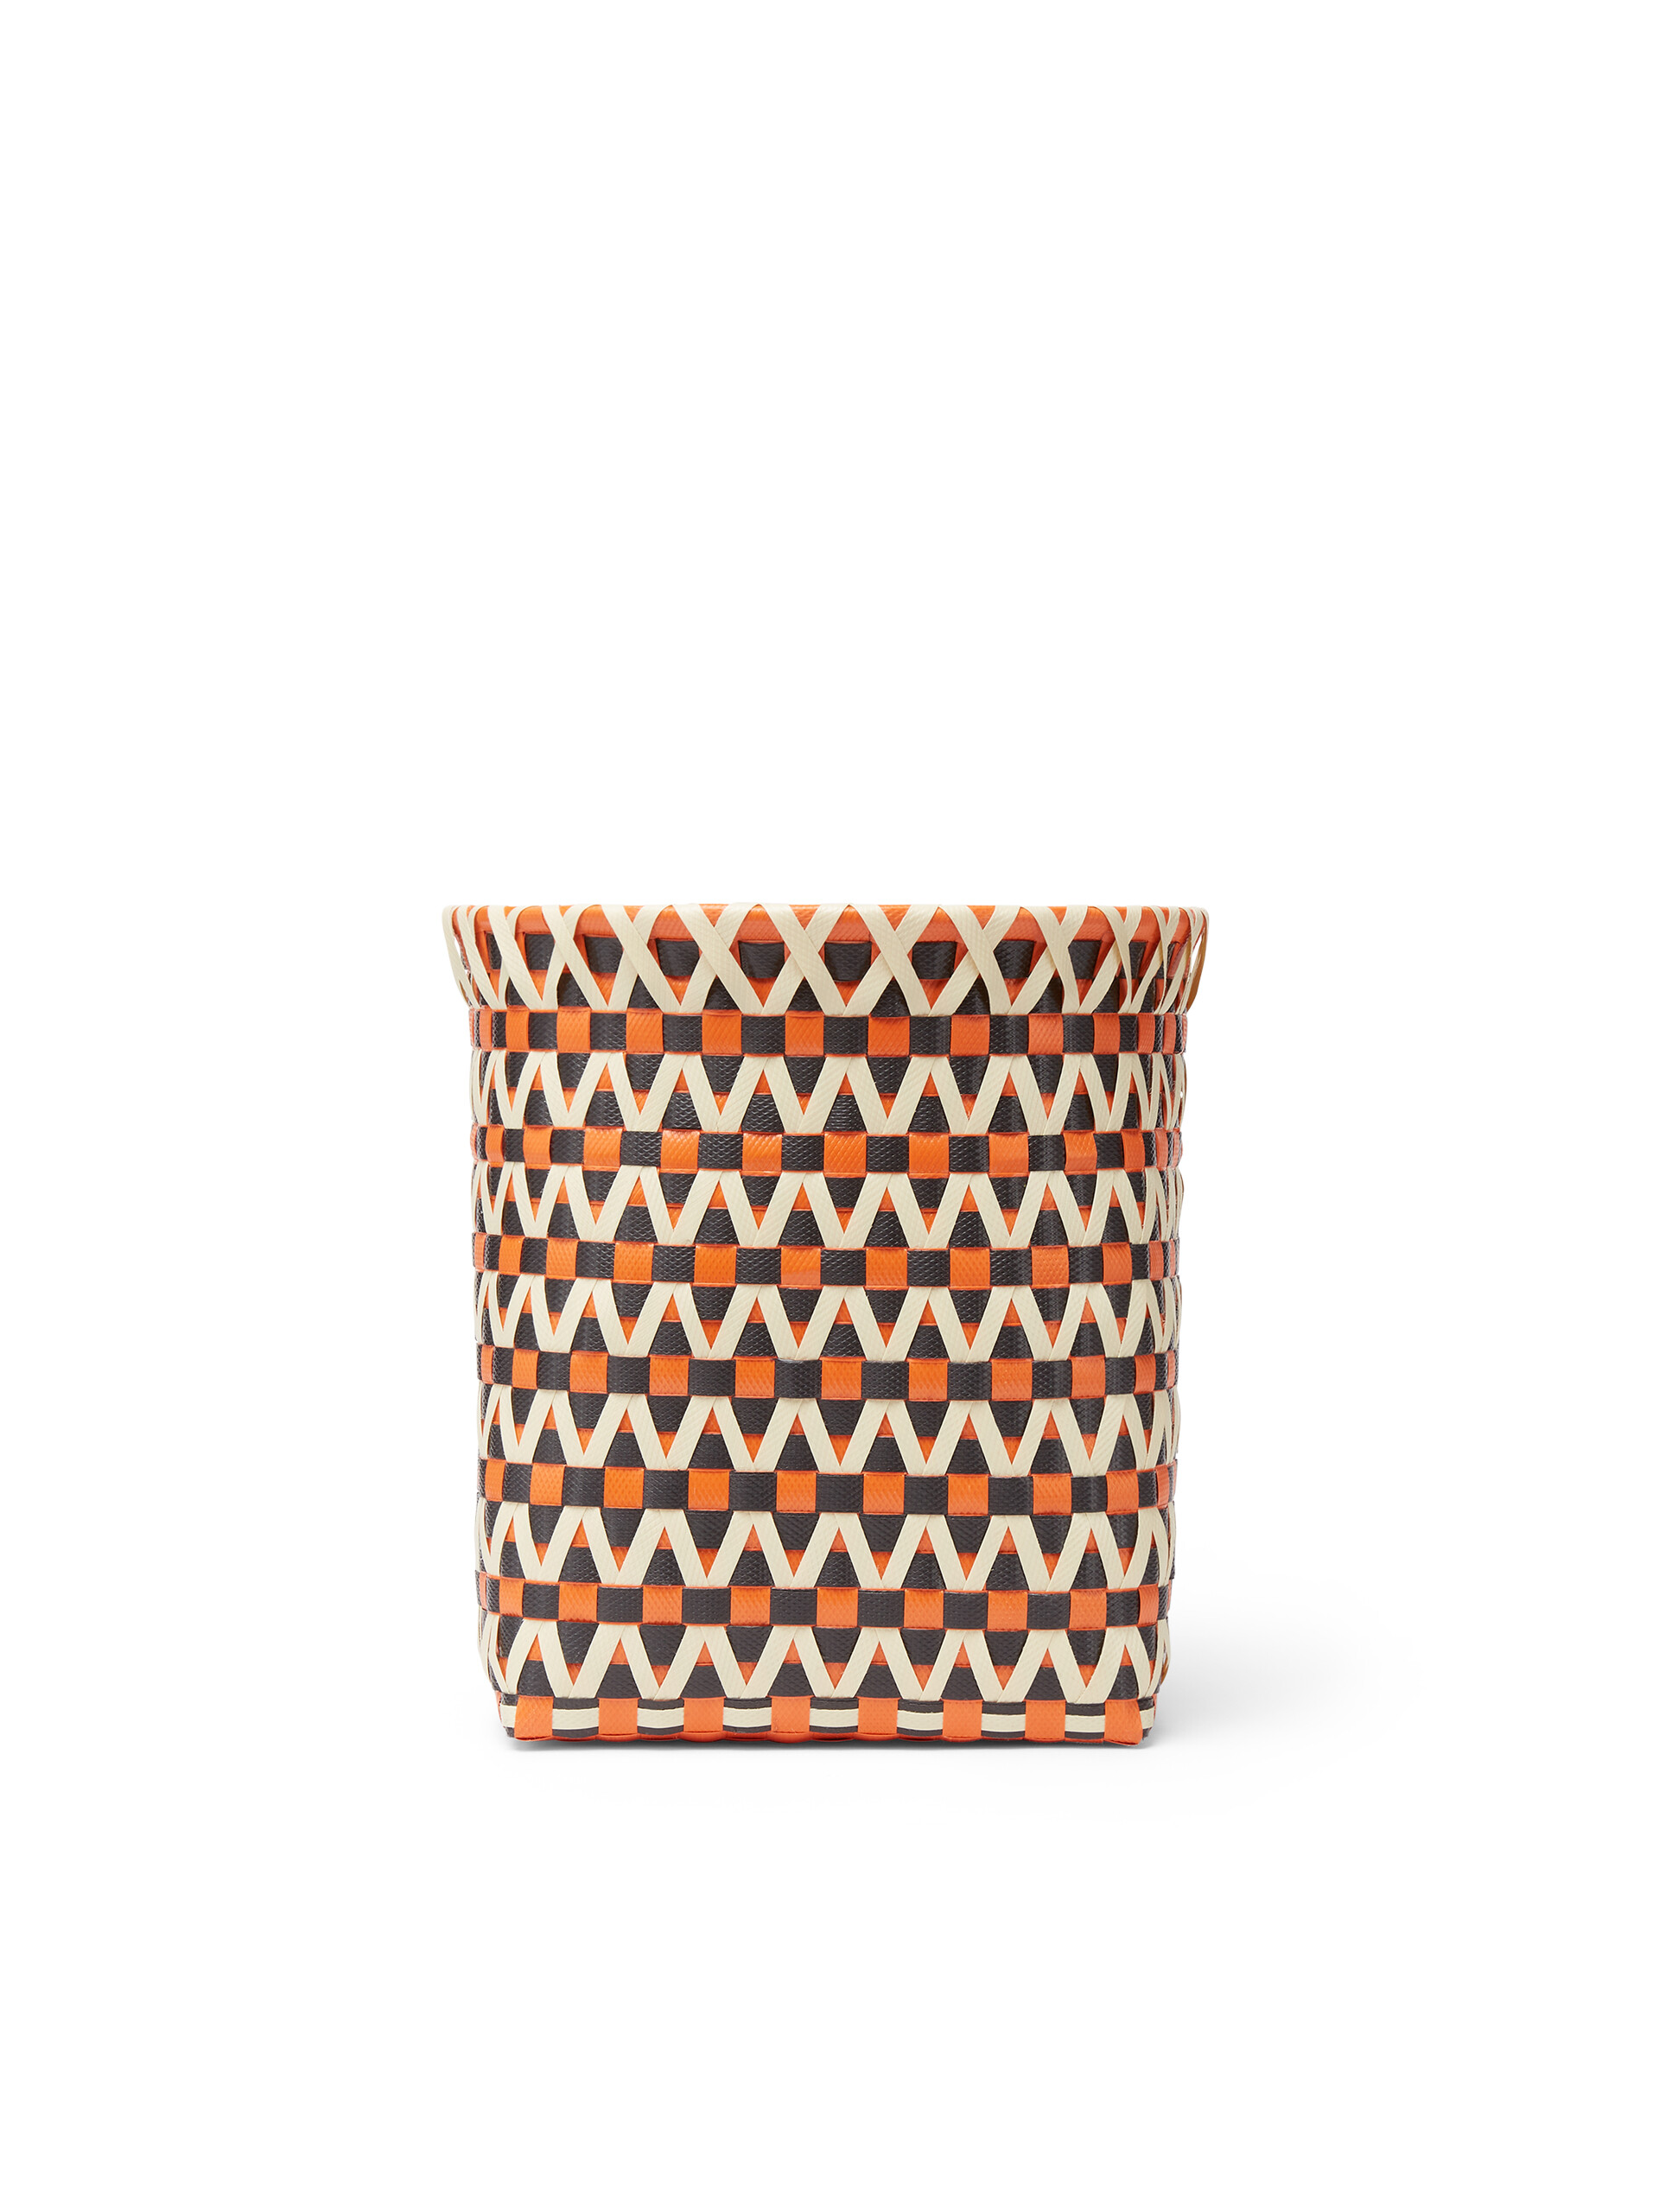 MARNI MARKET basket in orange black and white woven PVC - Home Accessories - Image 3